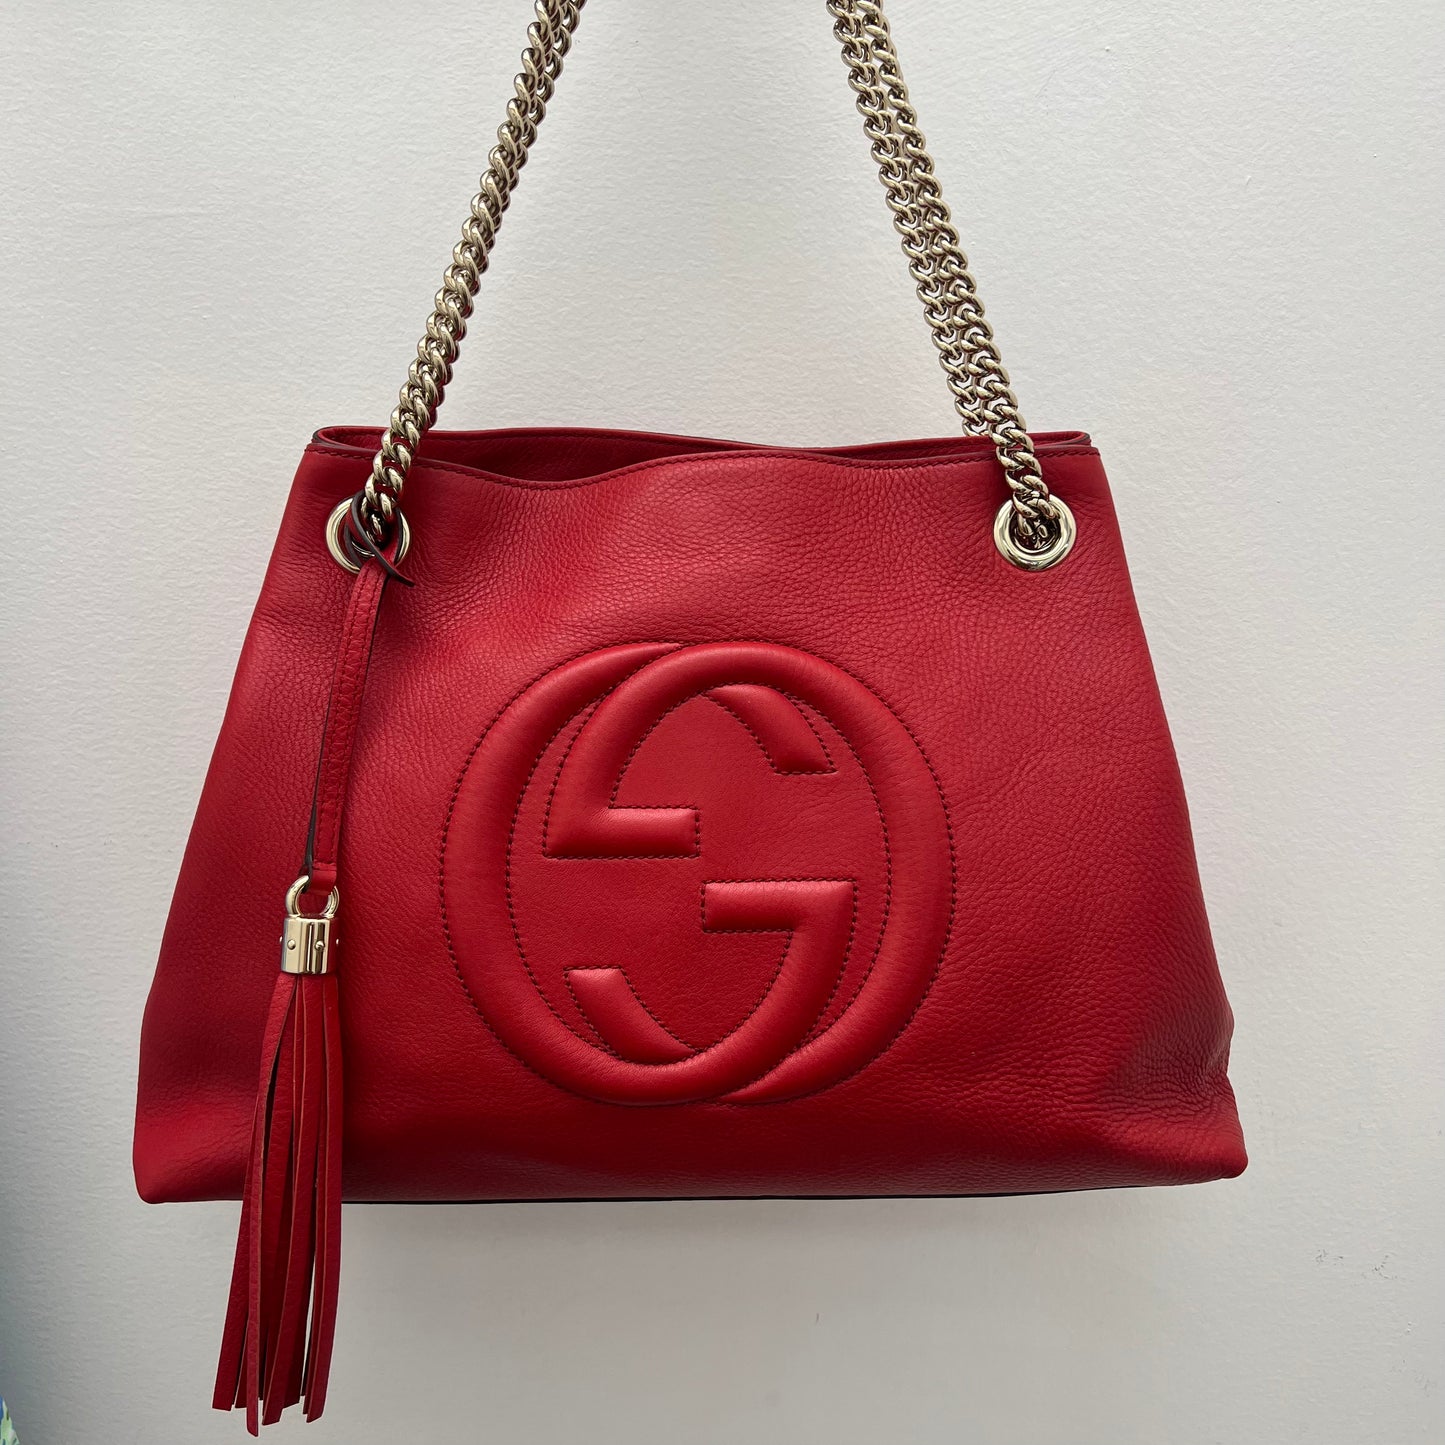 Gucci Soho Chain Hobo Bag